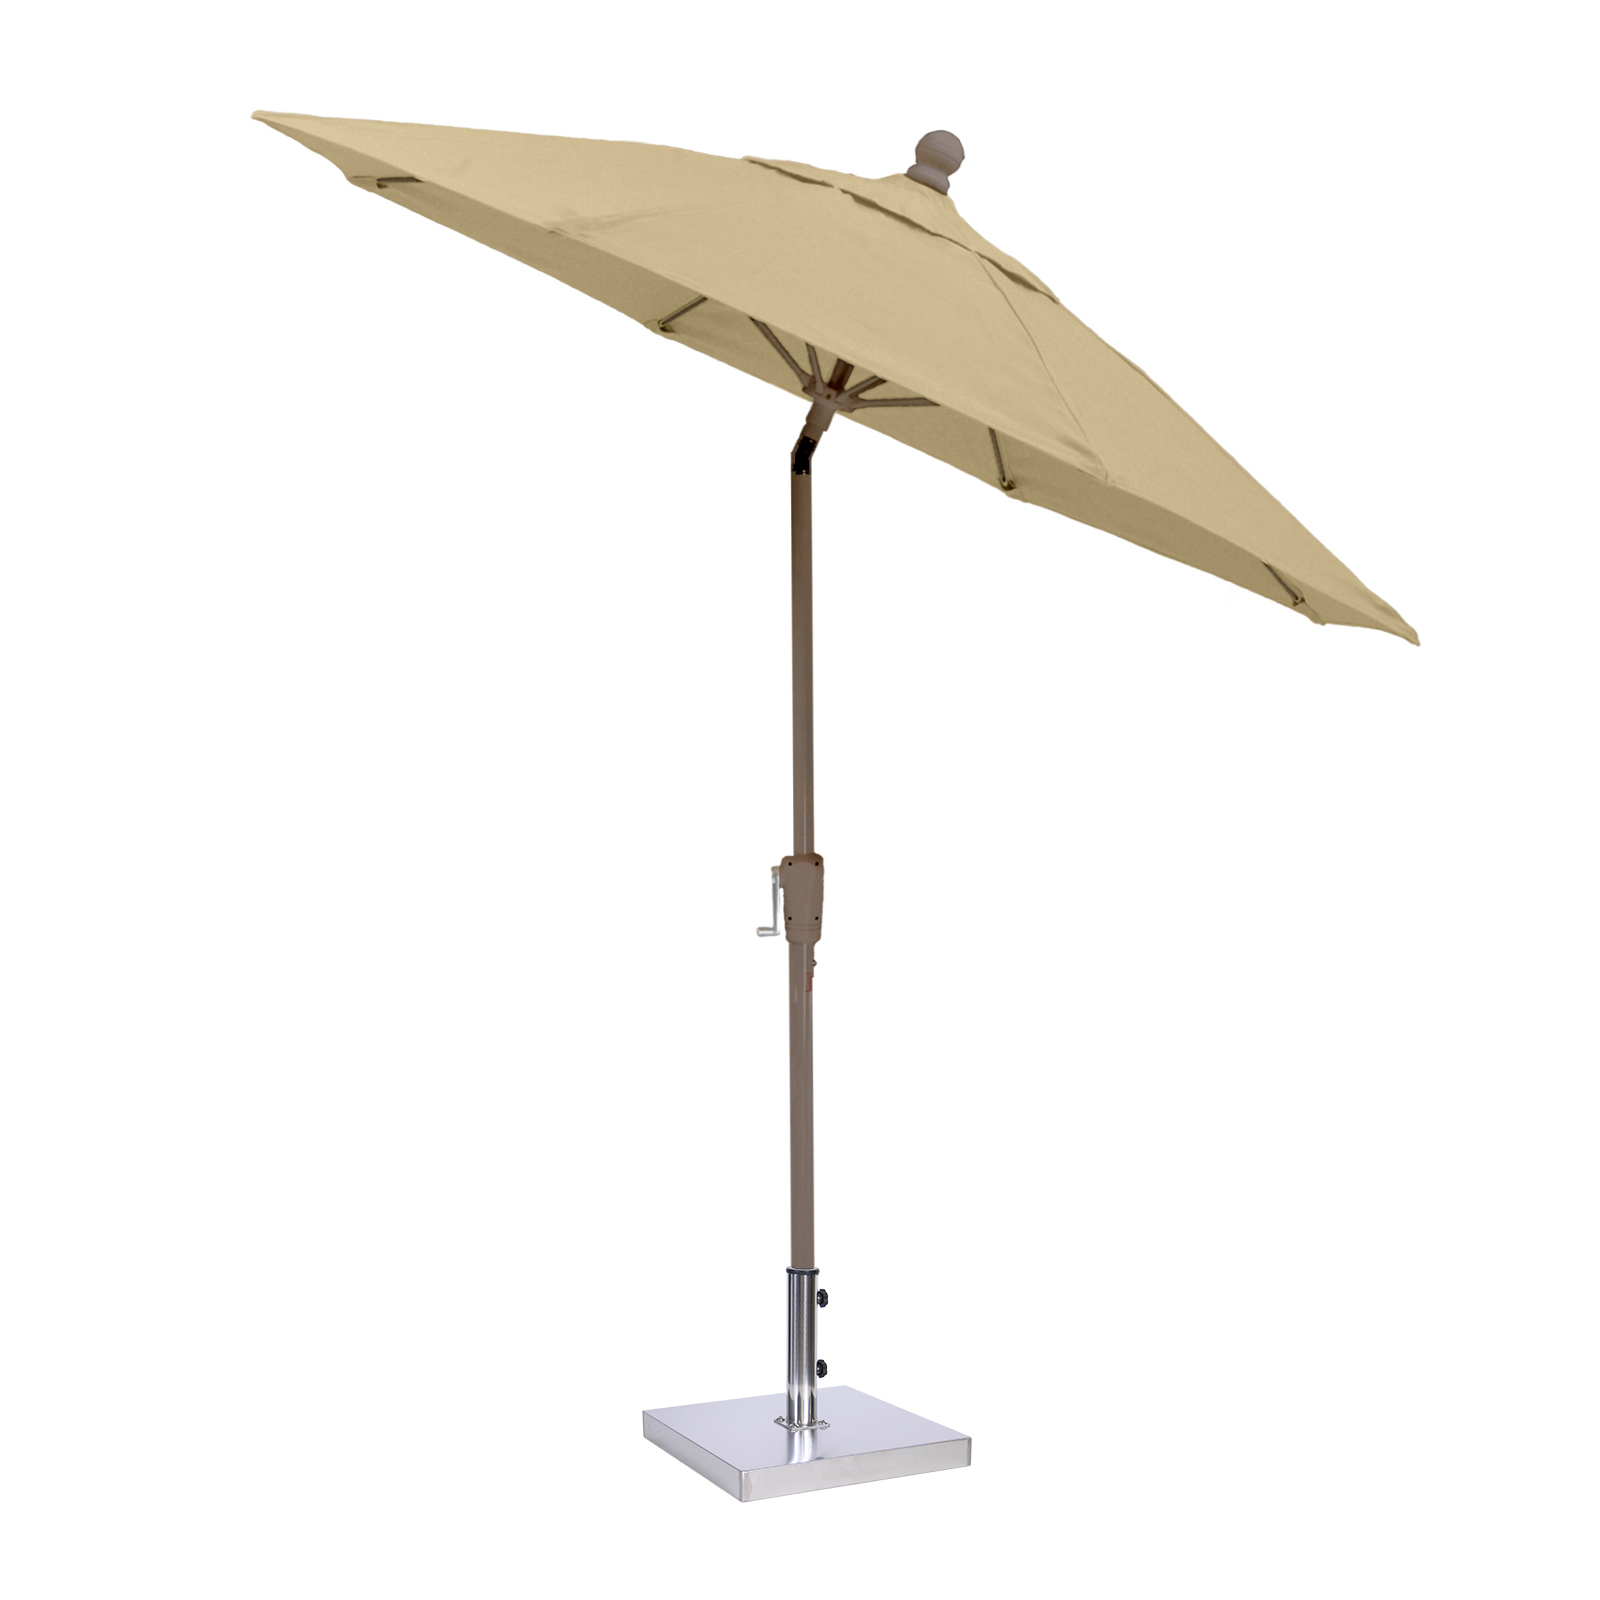 MiYu Furniture  7.5 ft Fiberglass Market Umbrella with Auto Tilt - Champagne Frame